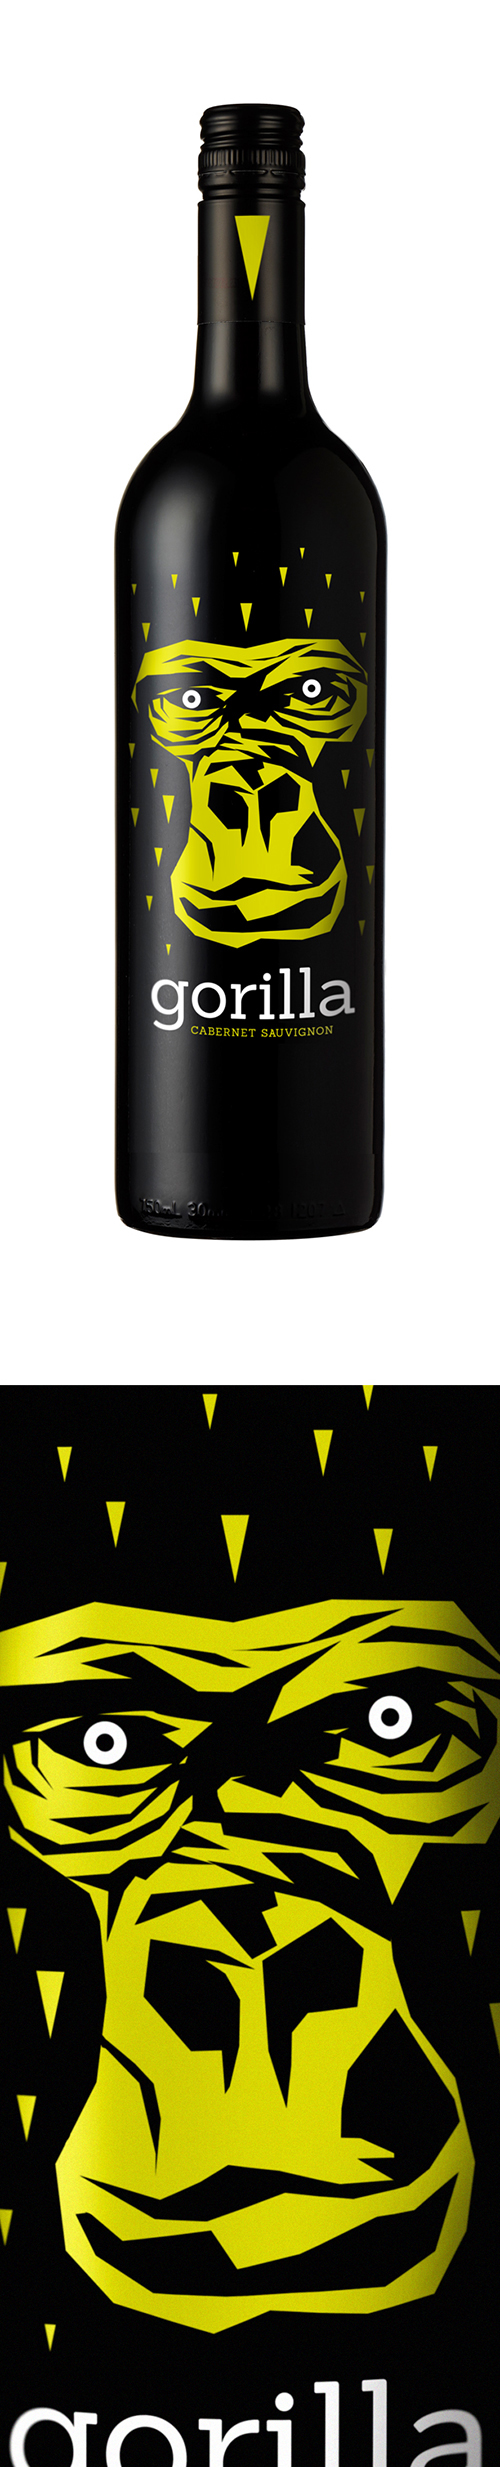 wine bottle design brand identity